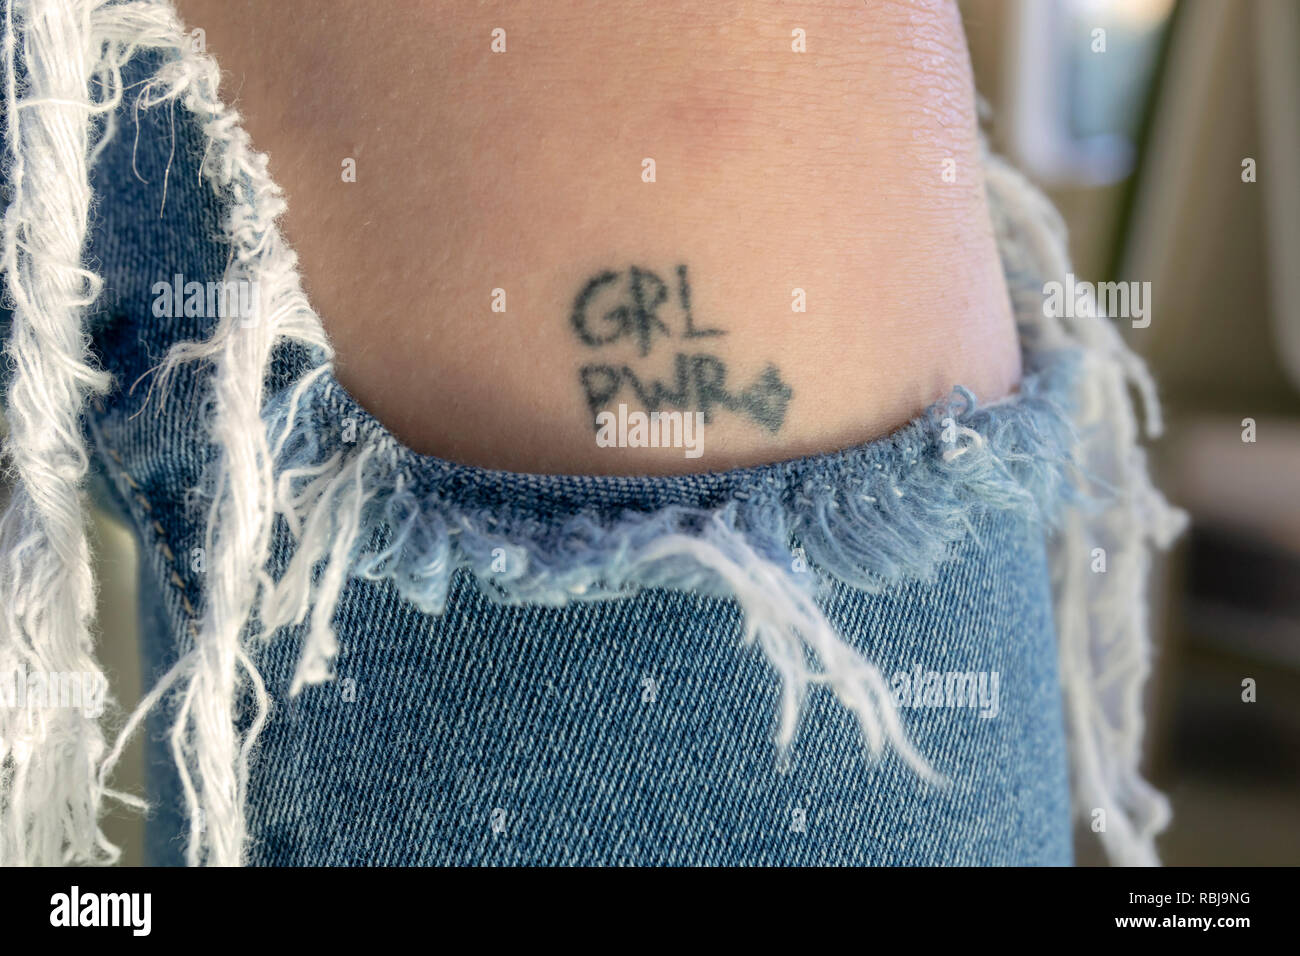 Frau bein tattoos Tattoo Blumen